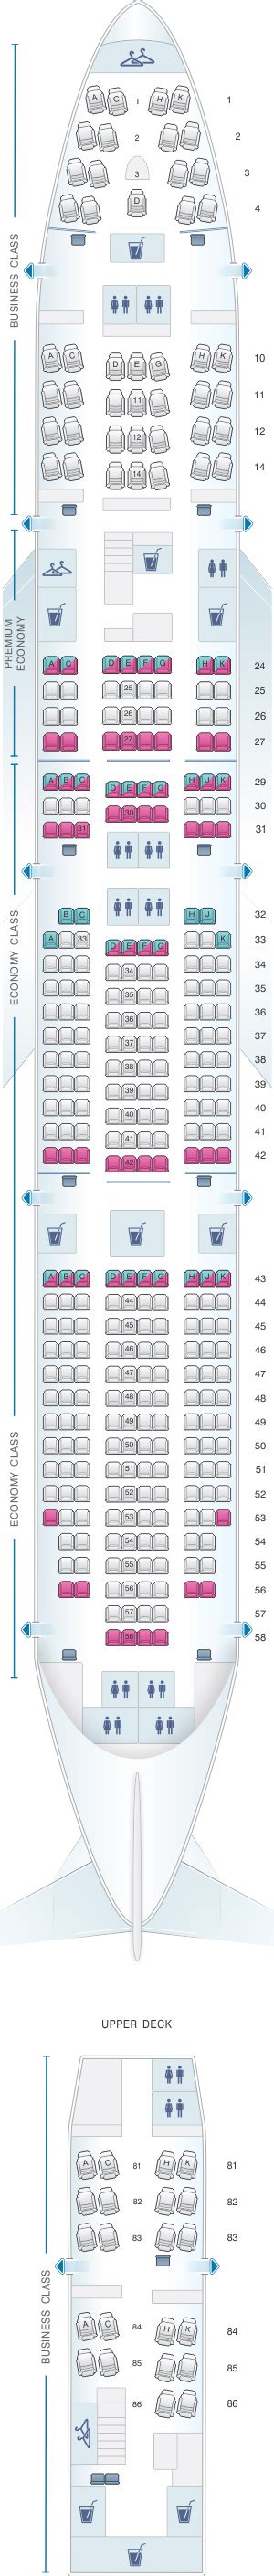 Lufthansa Seating Chart Boeing 747 400 My Bios